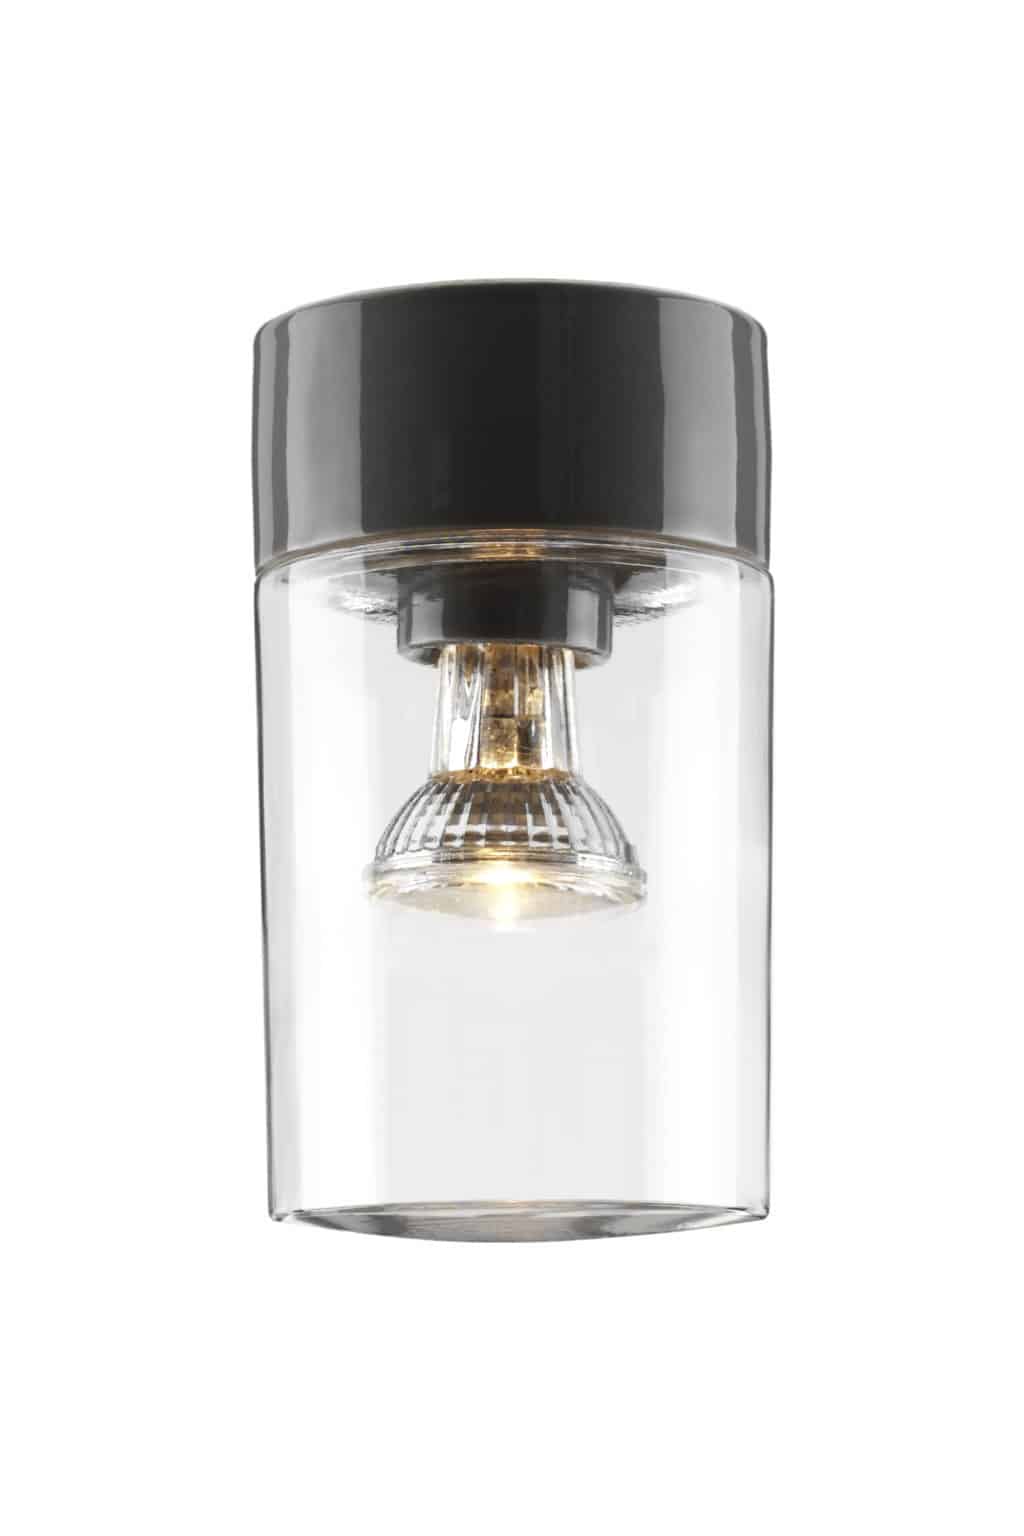 Buitenlamp Opus ifo electric zwart opus 120/200 porselein tuinextra helder glas